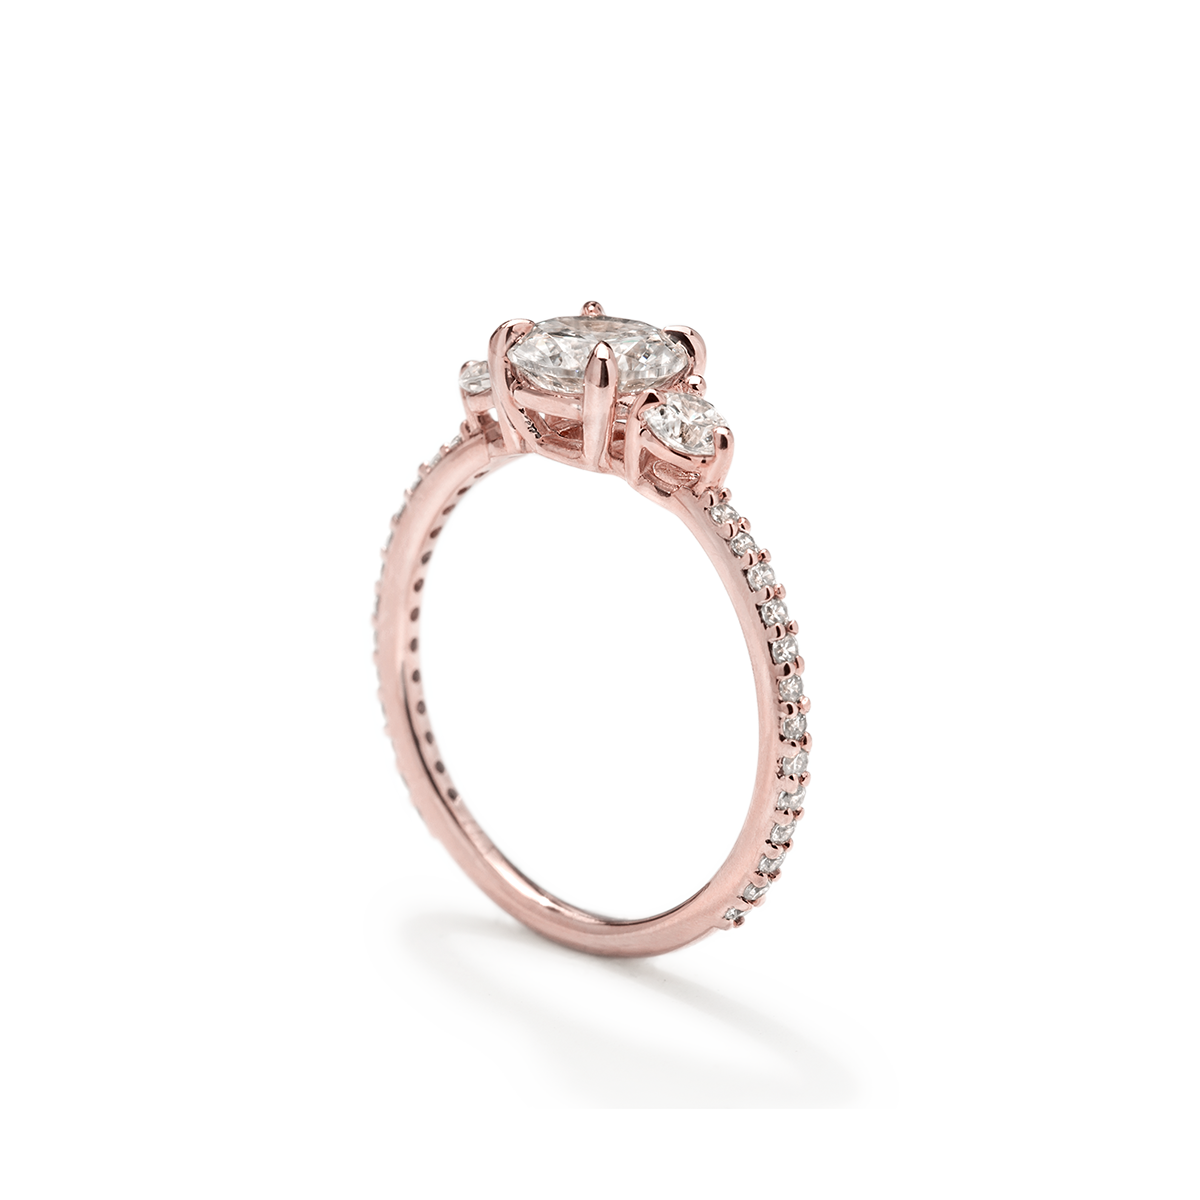 Spangel Fashion Gold Design American Diamond Jewellery Ring for